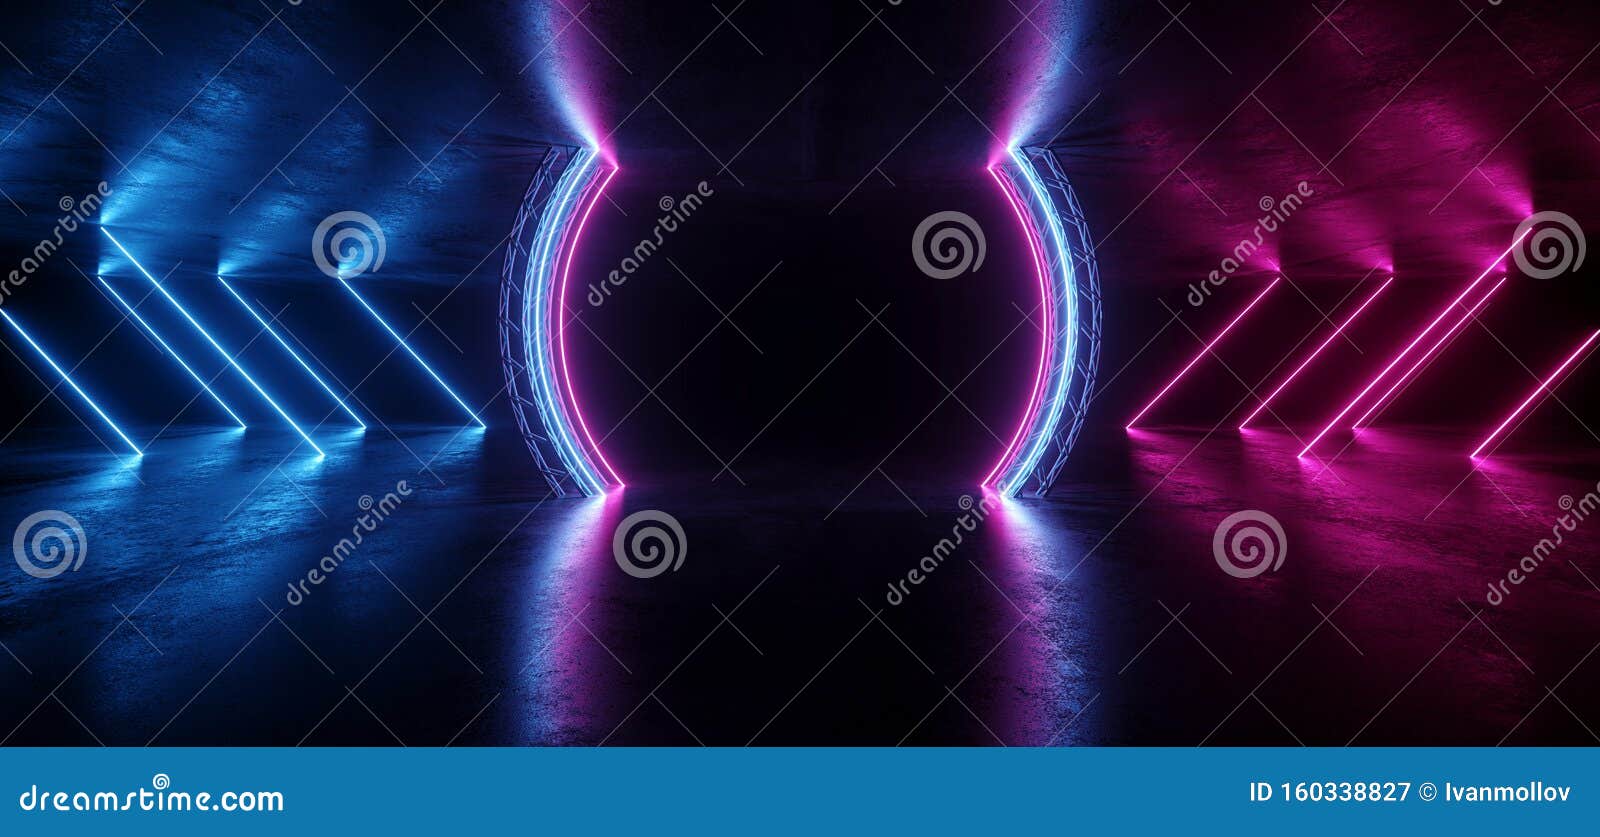 circle construction gate sci fi futuristic neon glowing purple blue laser lines reflective concrete grunge dark night show stage